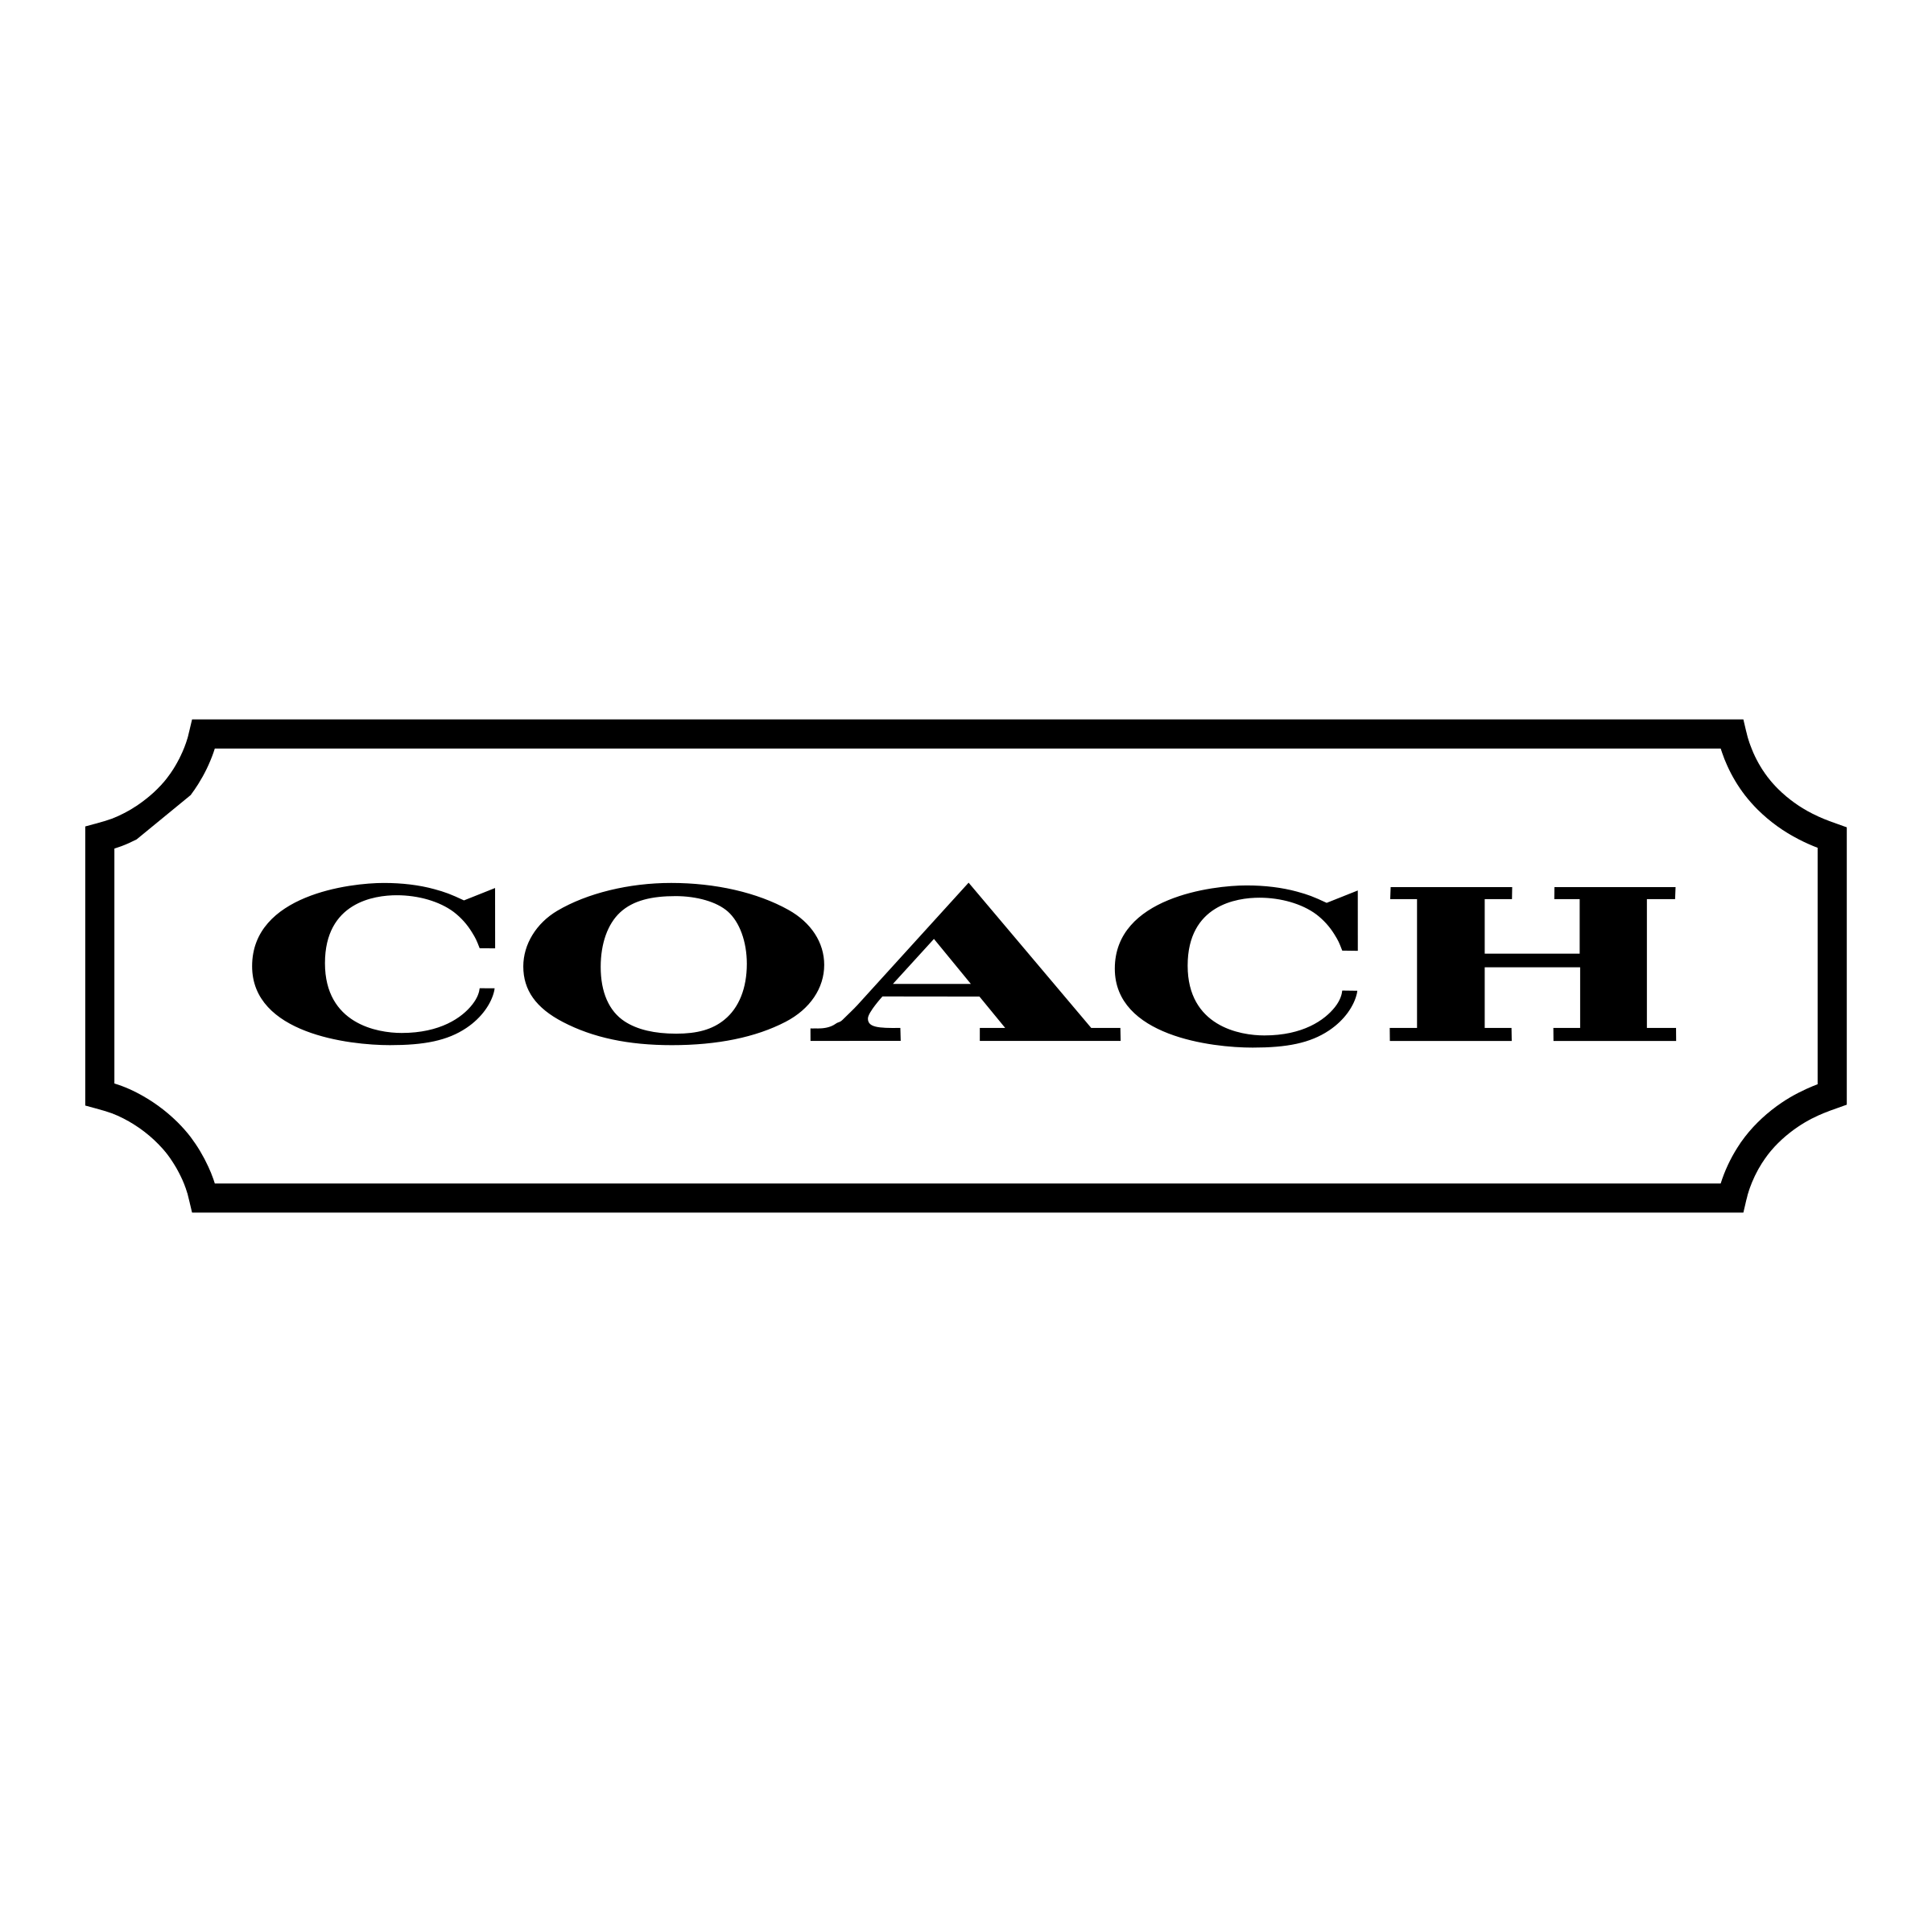 Coach Logo - Coach Logo PNG Transparent & SVG Vector - Freebie Supply